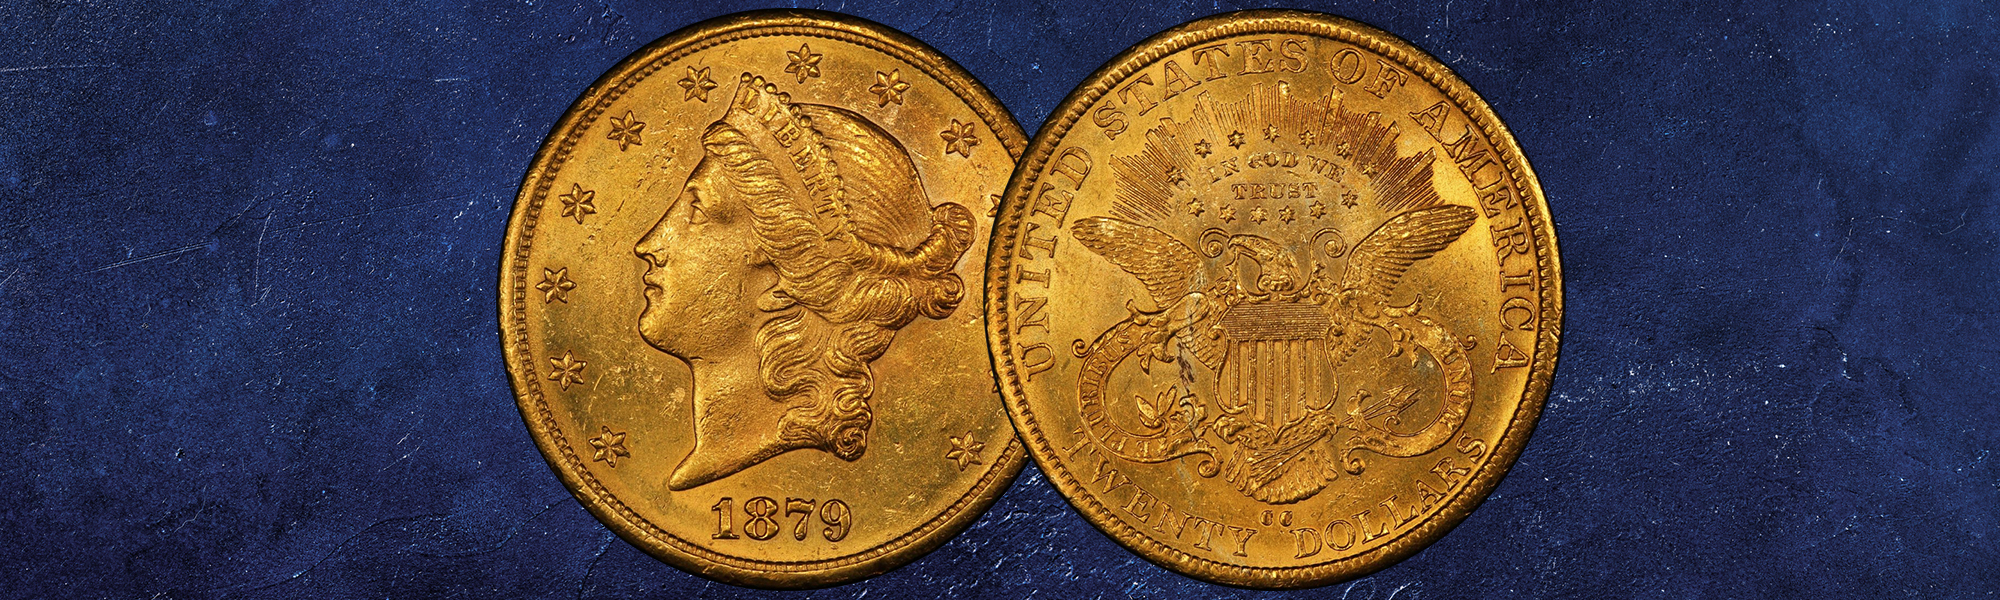 The Liberty $5 Gold Coin: Coin Value & More